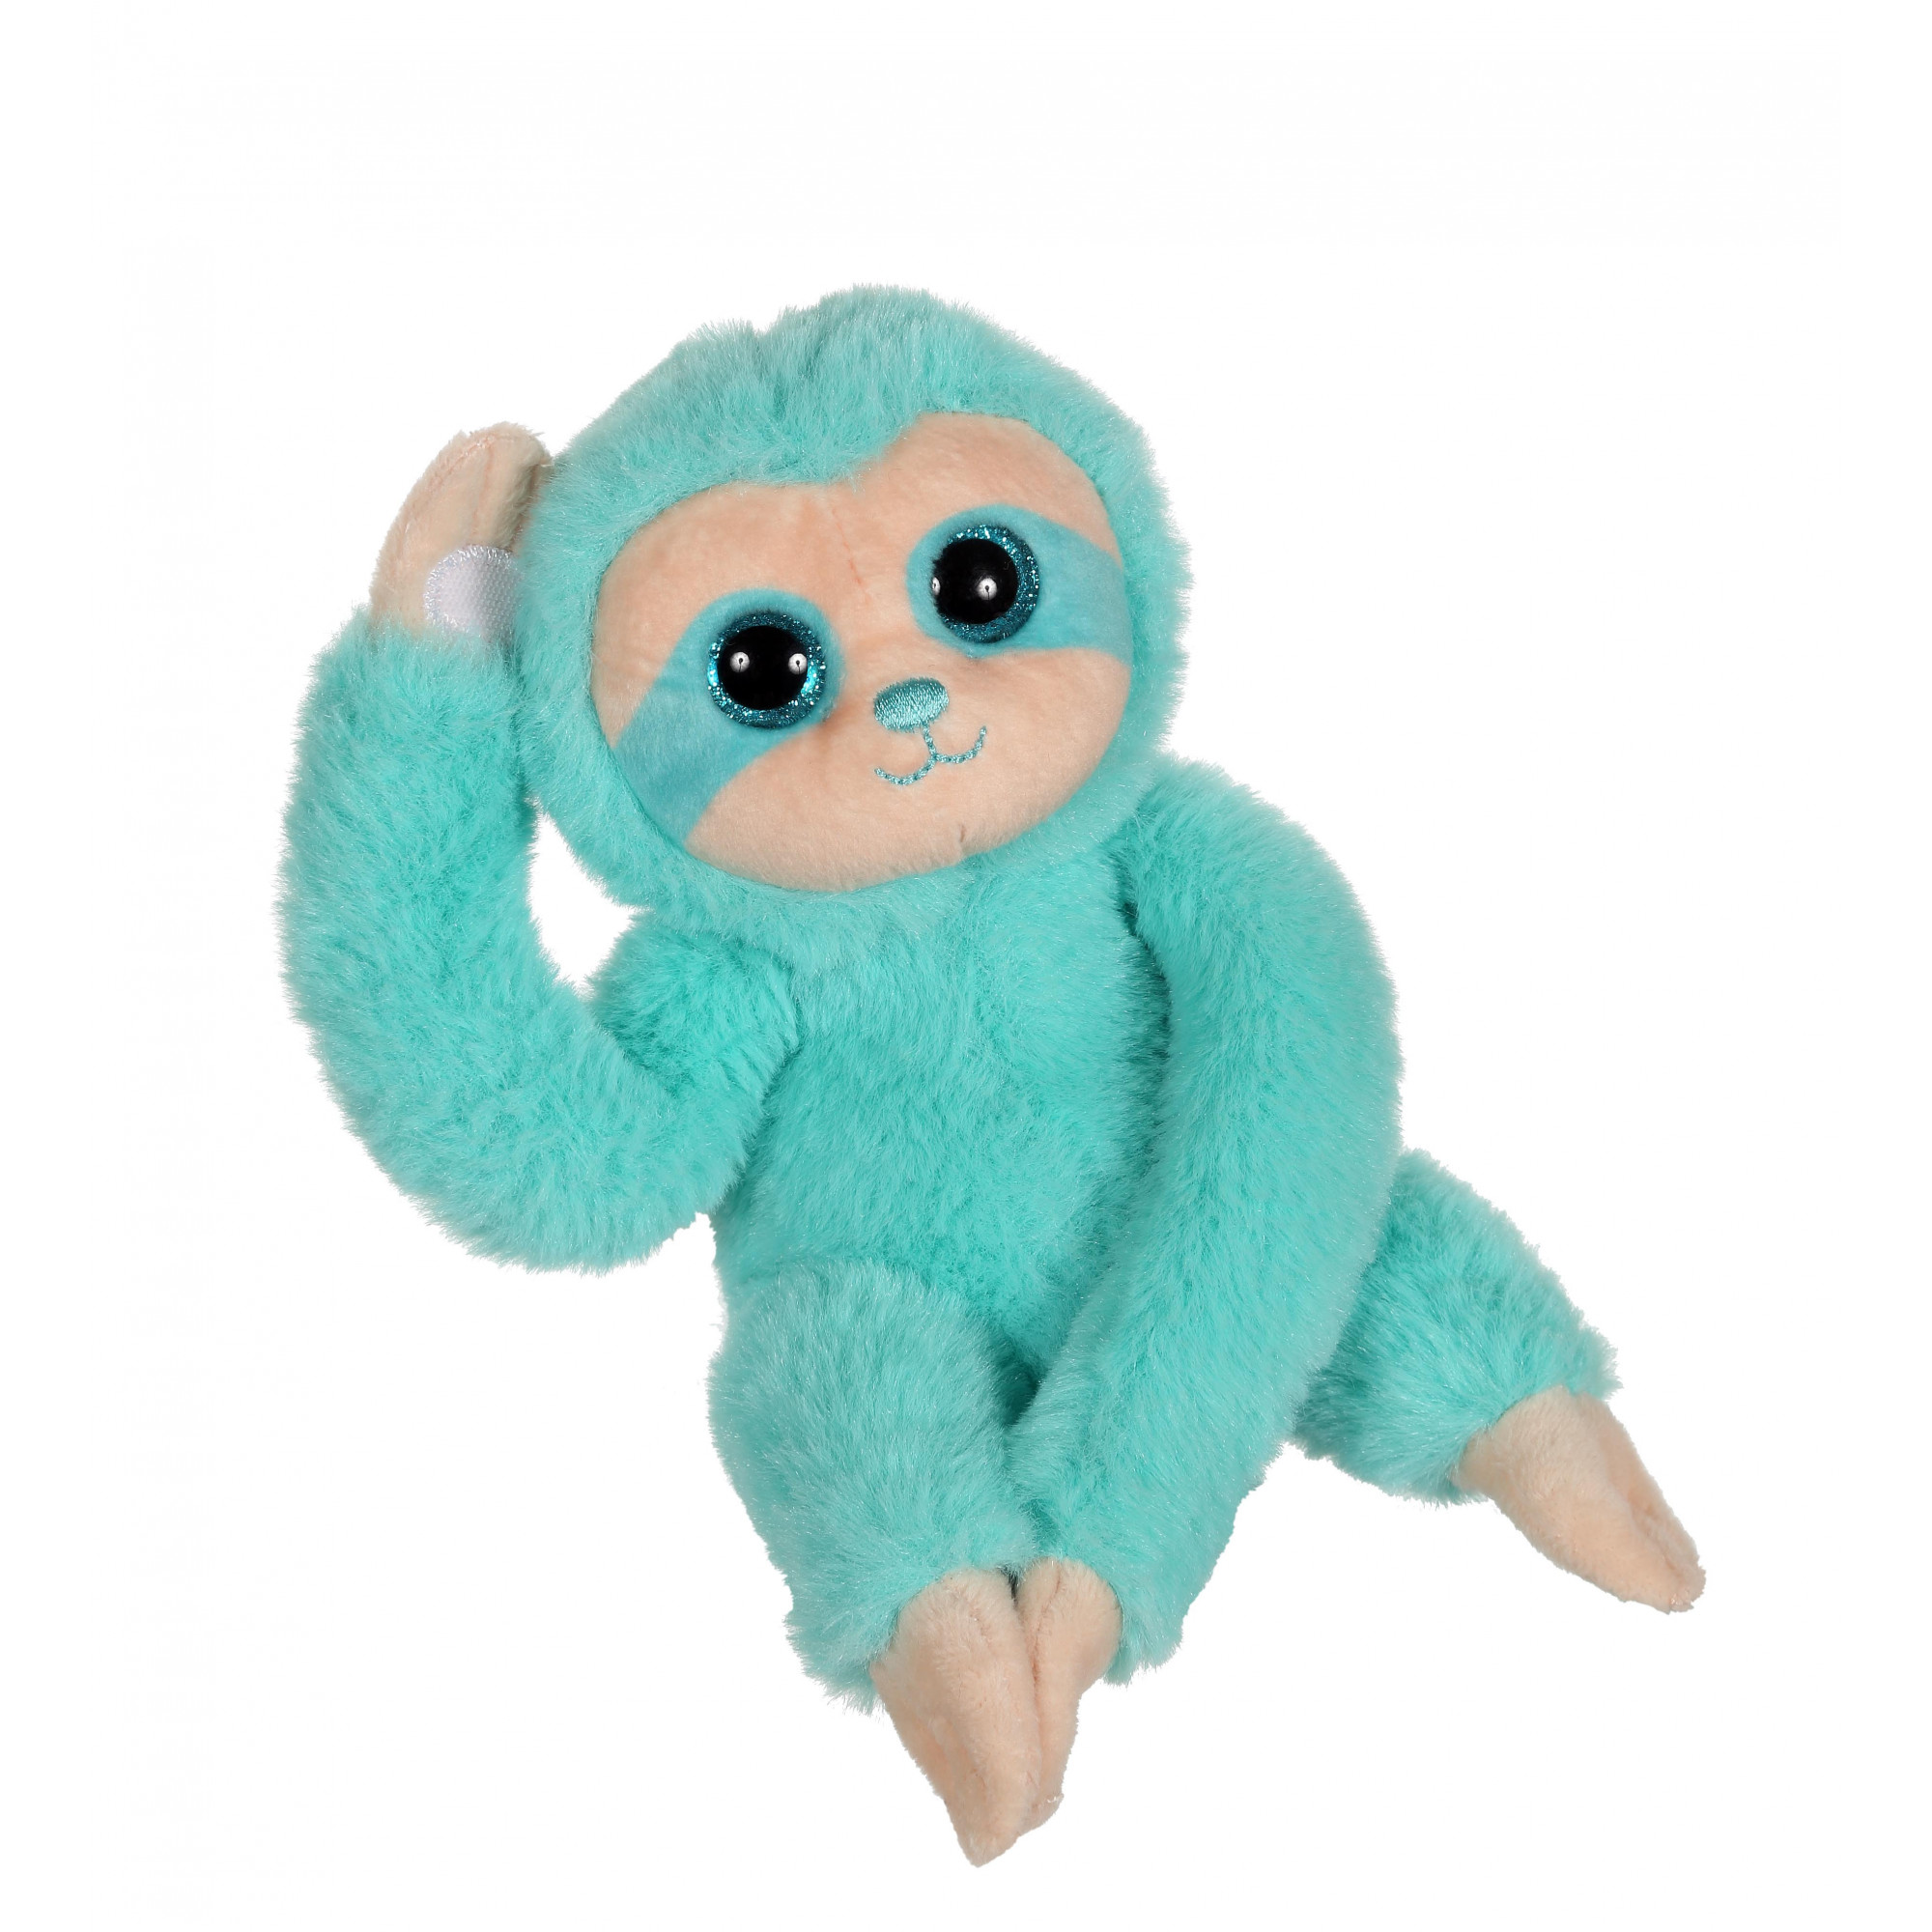 Turquoise Sloth - 16 cm